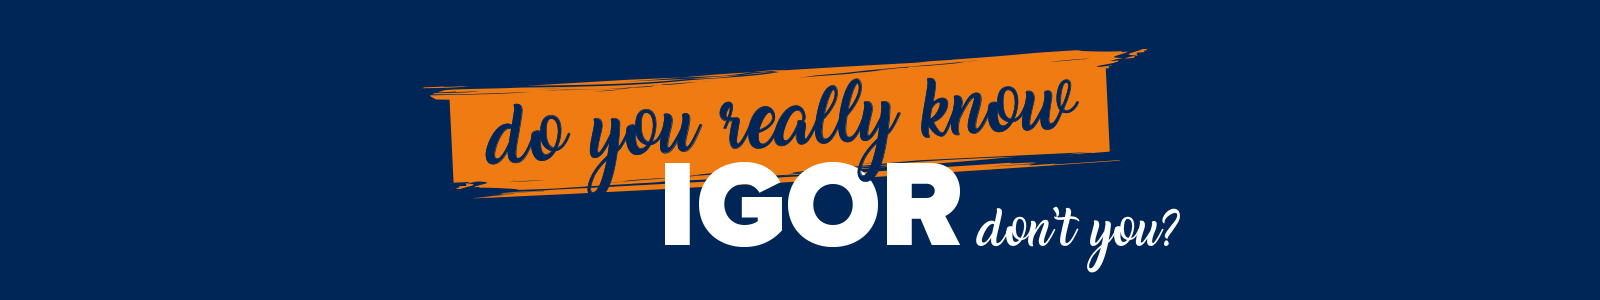 Do you really know IGOR don’t you?